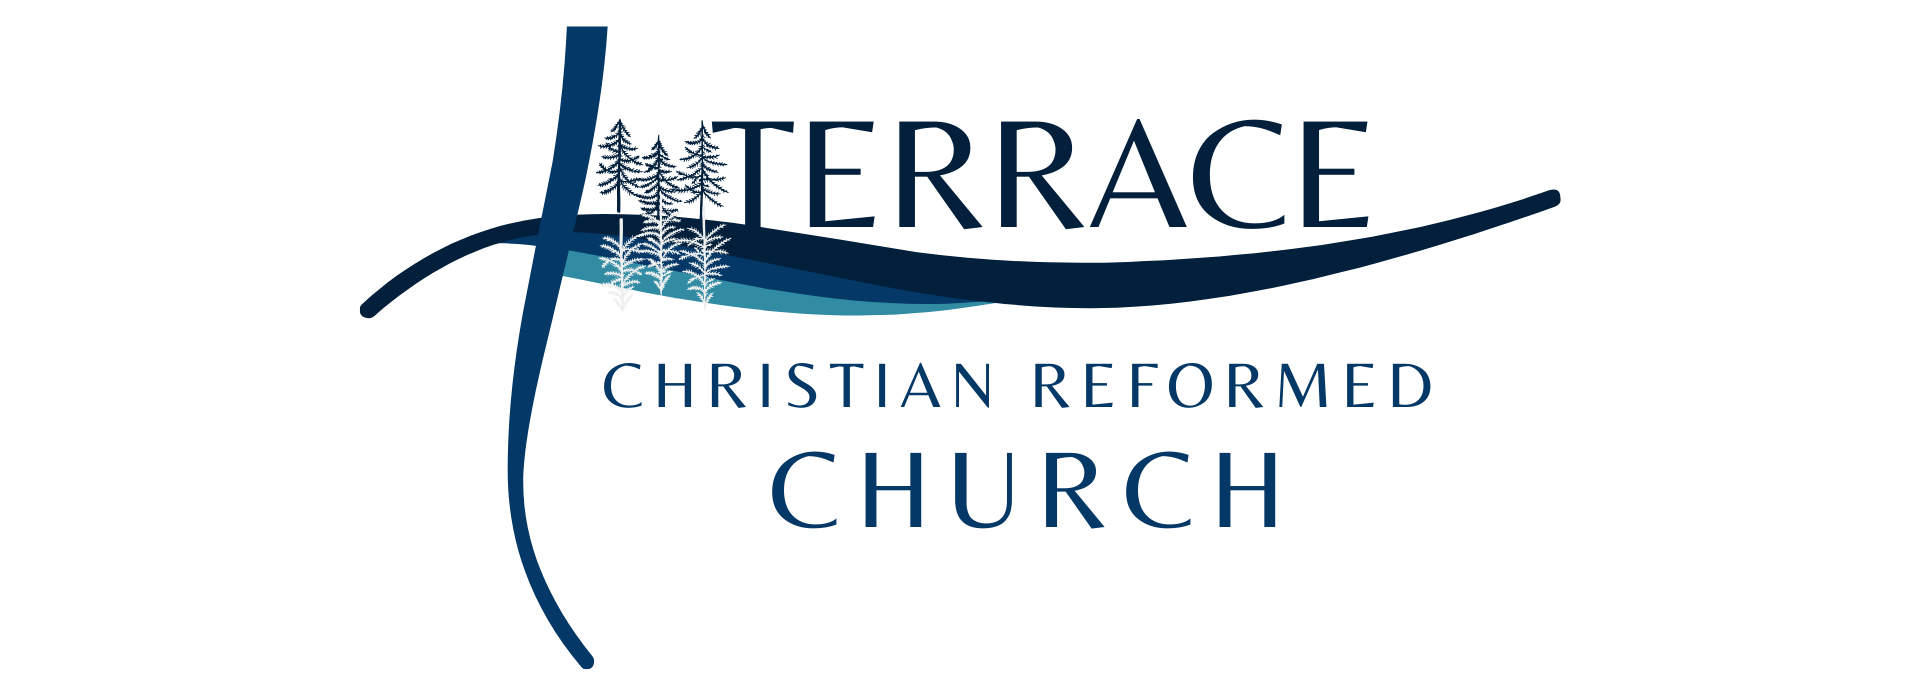 Terrace Christian Reformed Church